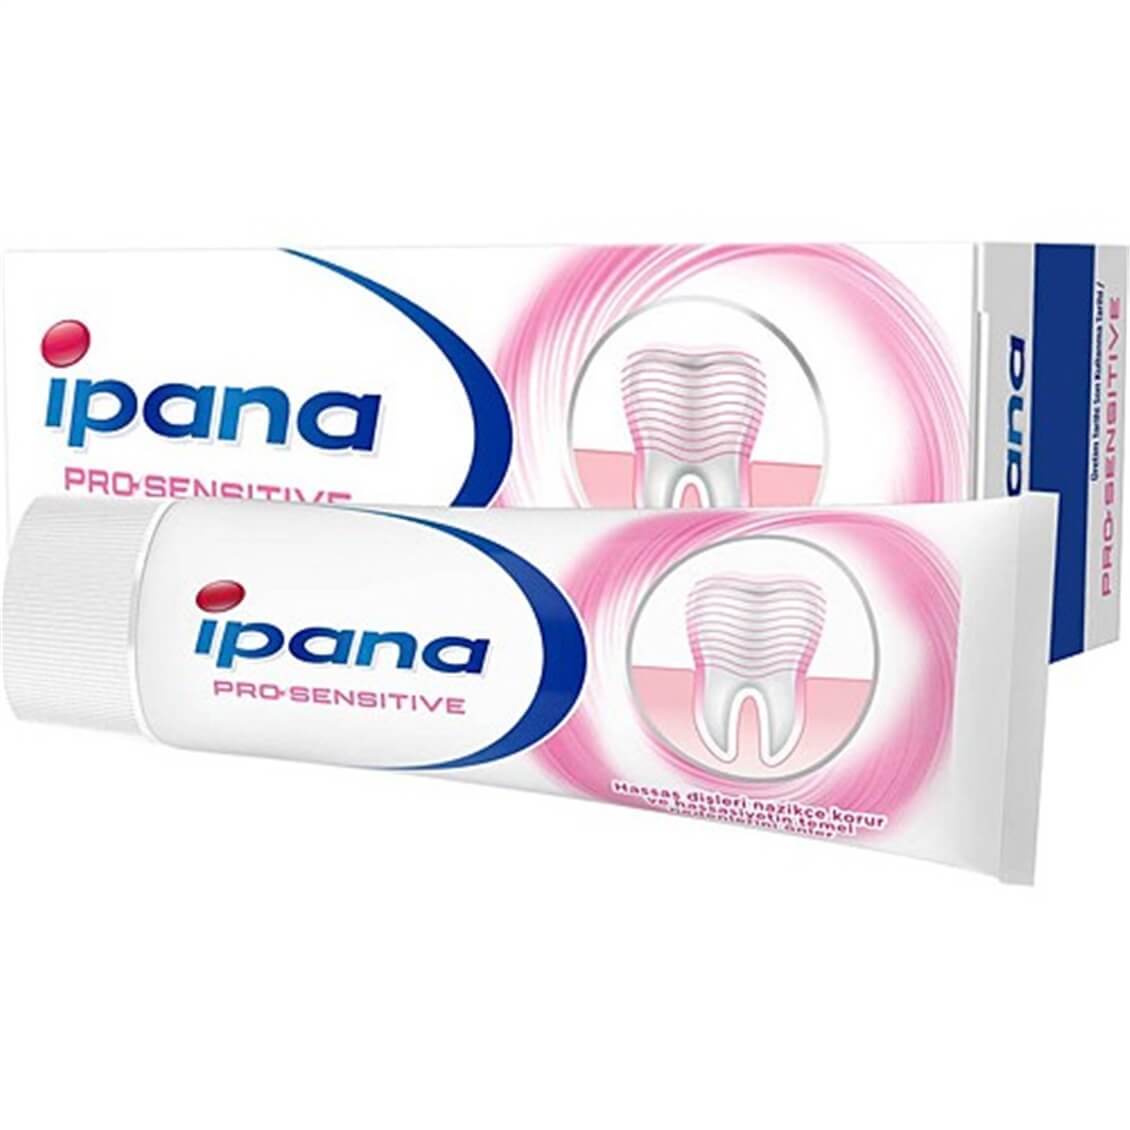 İpana Diş Macunu Pro Sensitive 75 ml - Onur Market